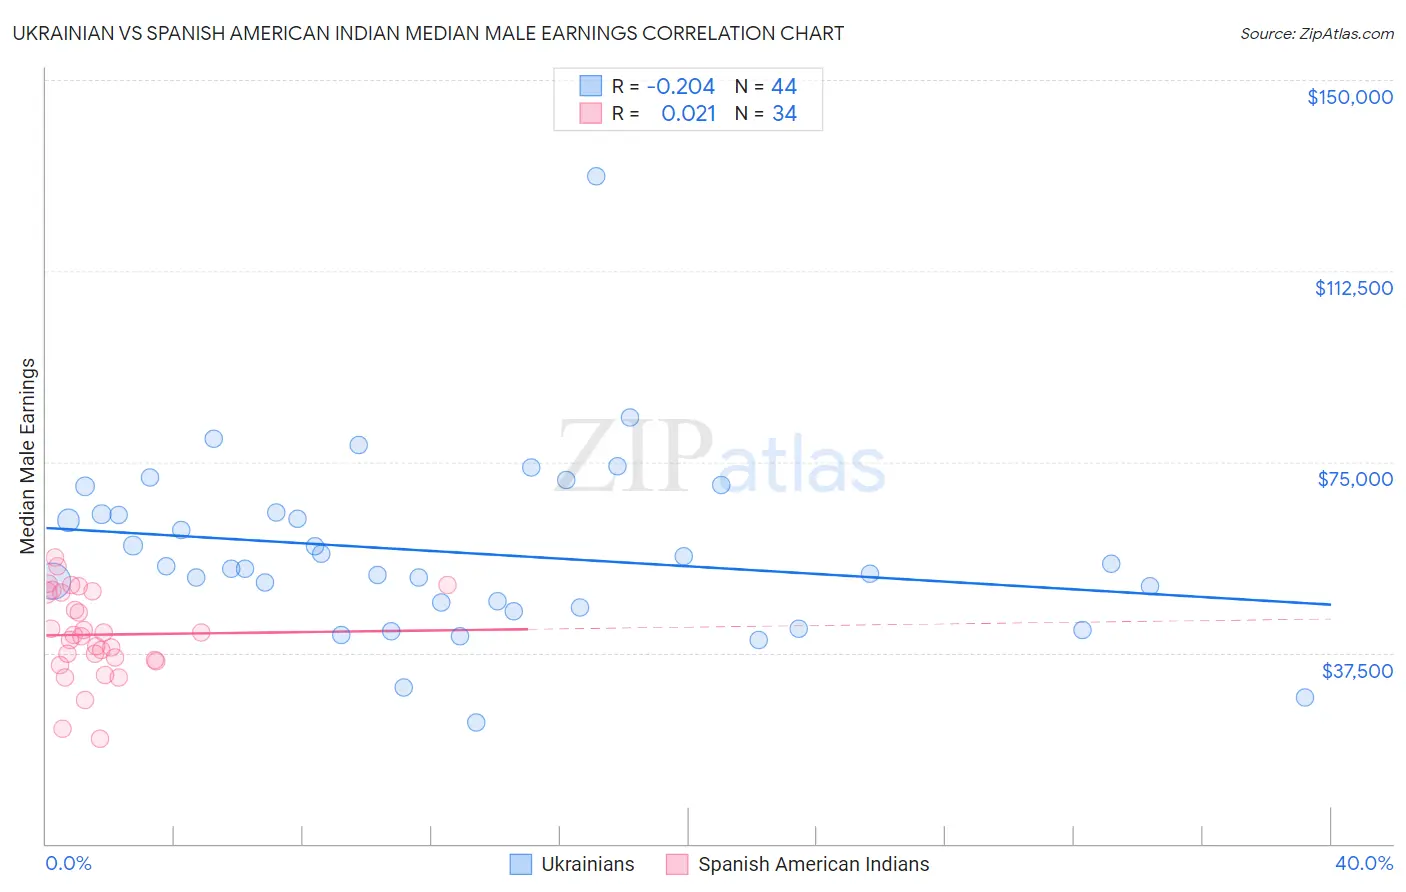 Ukrainian vs Spanish American Indian Median Male Earnings